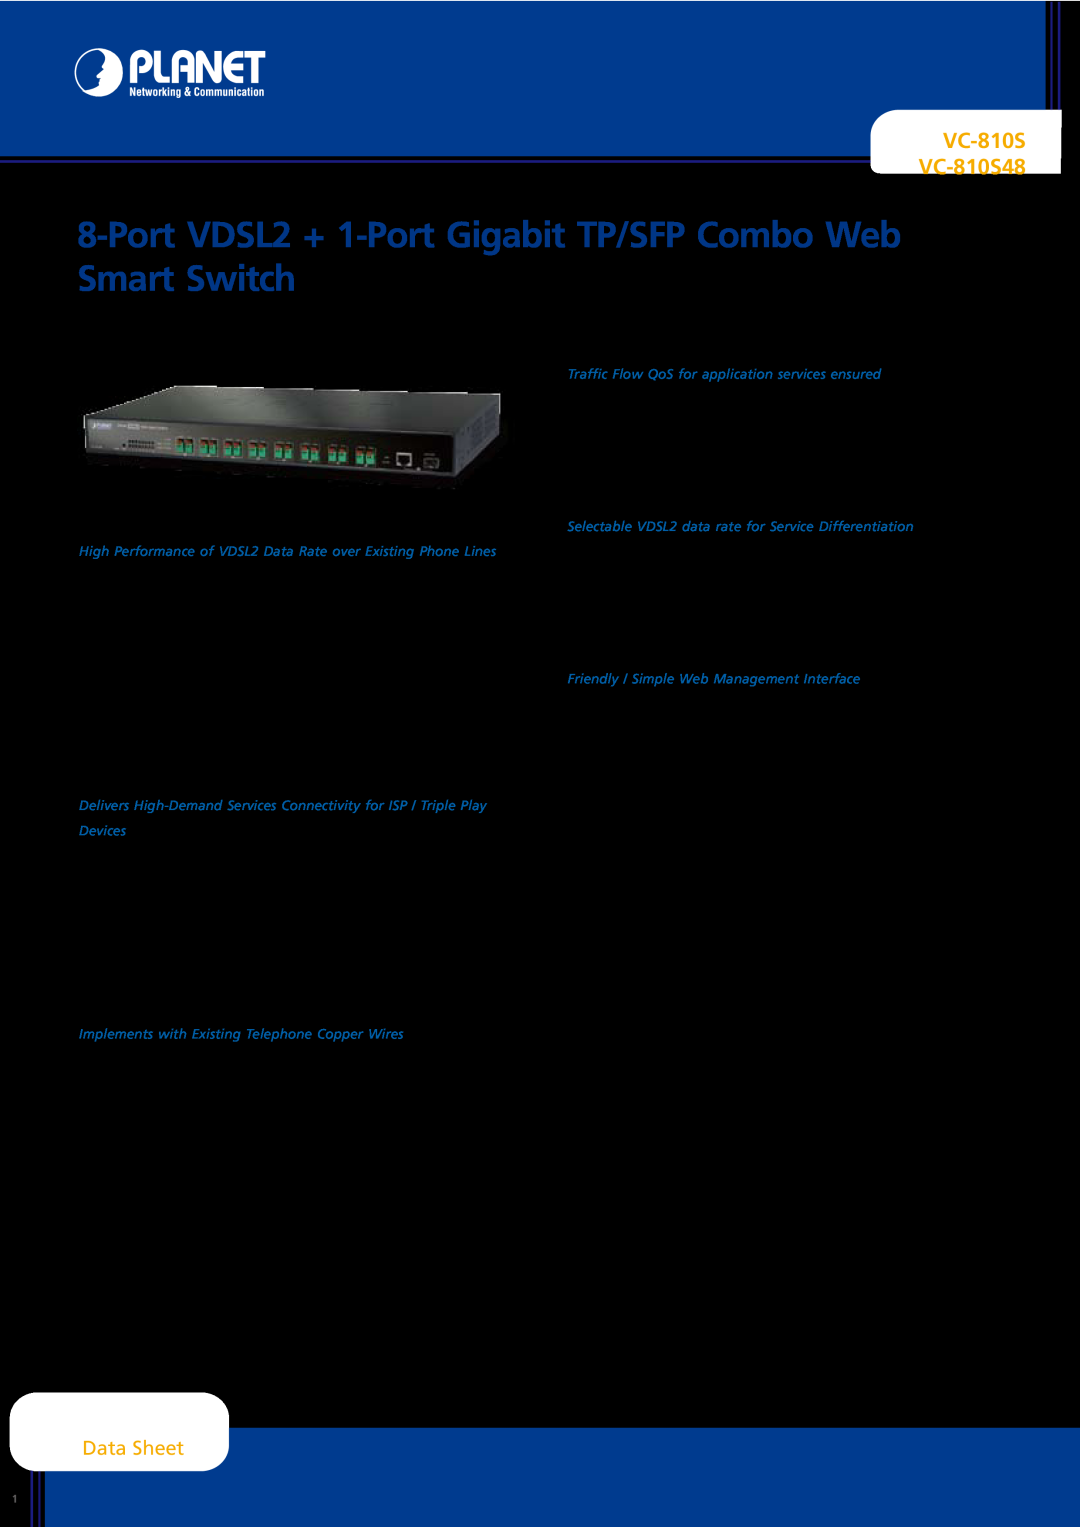 Planet Technology manual VC-810S VC-810S48, Data Sheet, Port VDSL2 + 1-Port Gigabit TP/SFP Combo Web Smart Switch 